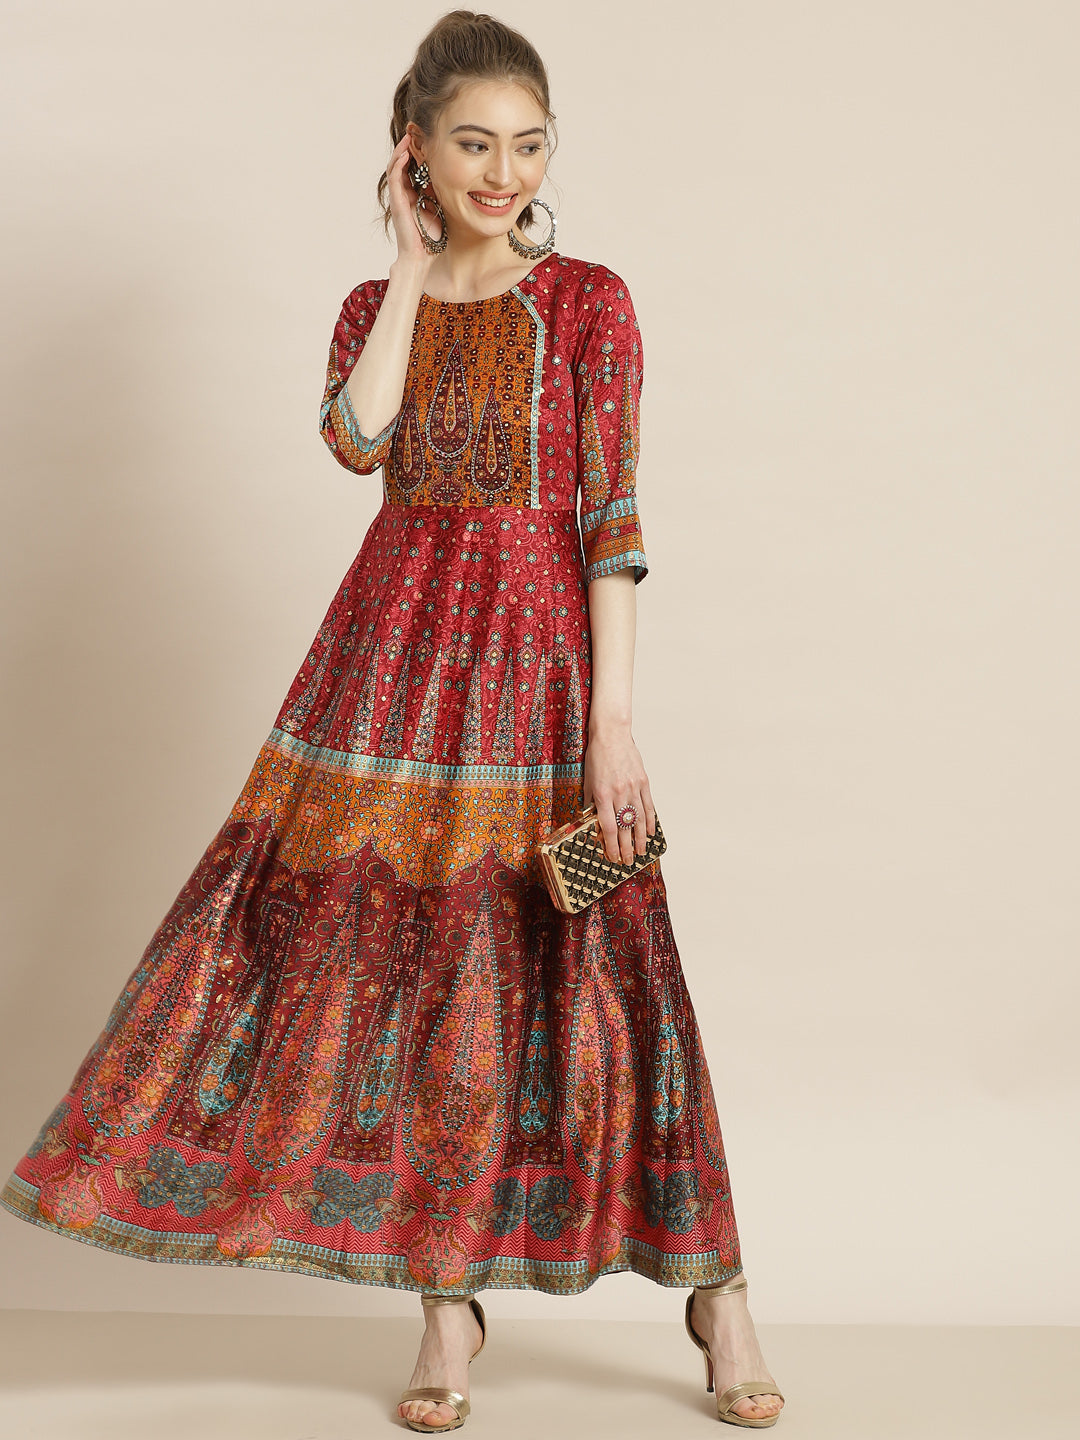 Juniper Maroon Ethnic Motif Printed Dull Satin Anarkali Dress With Buttons.